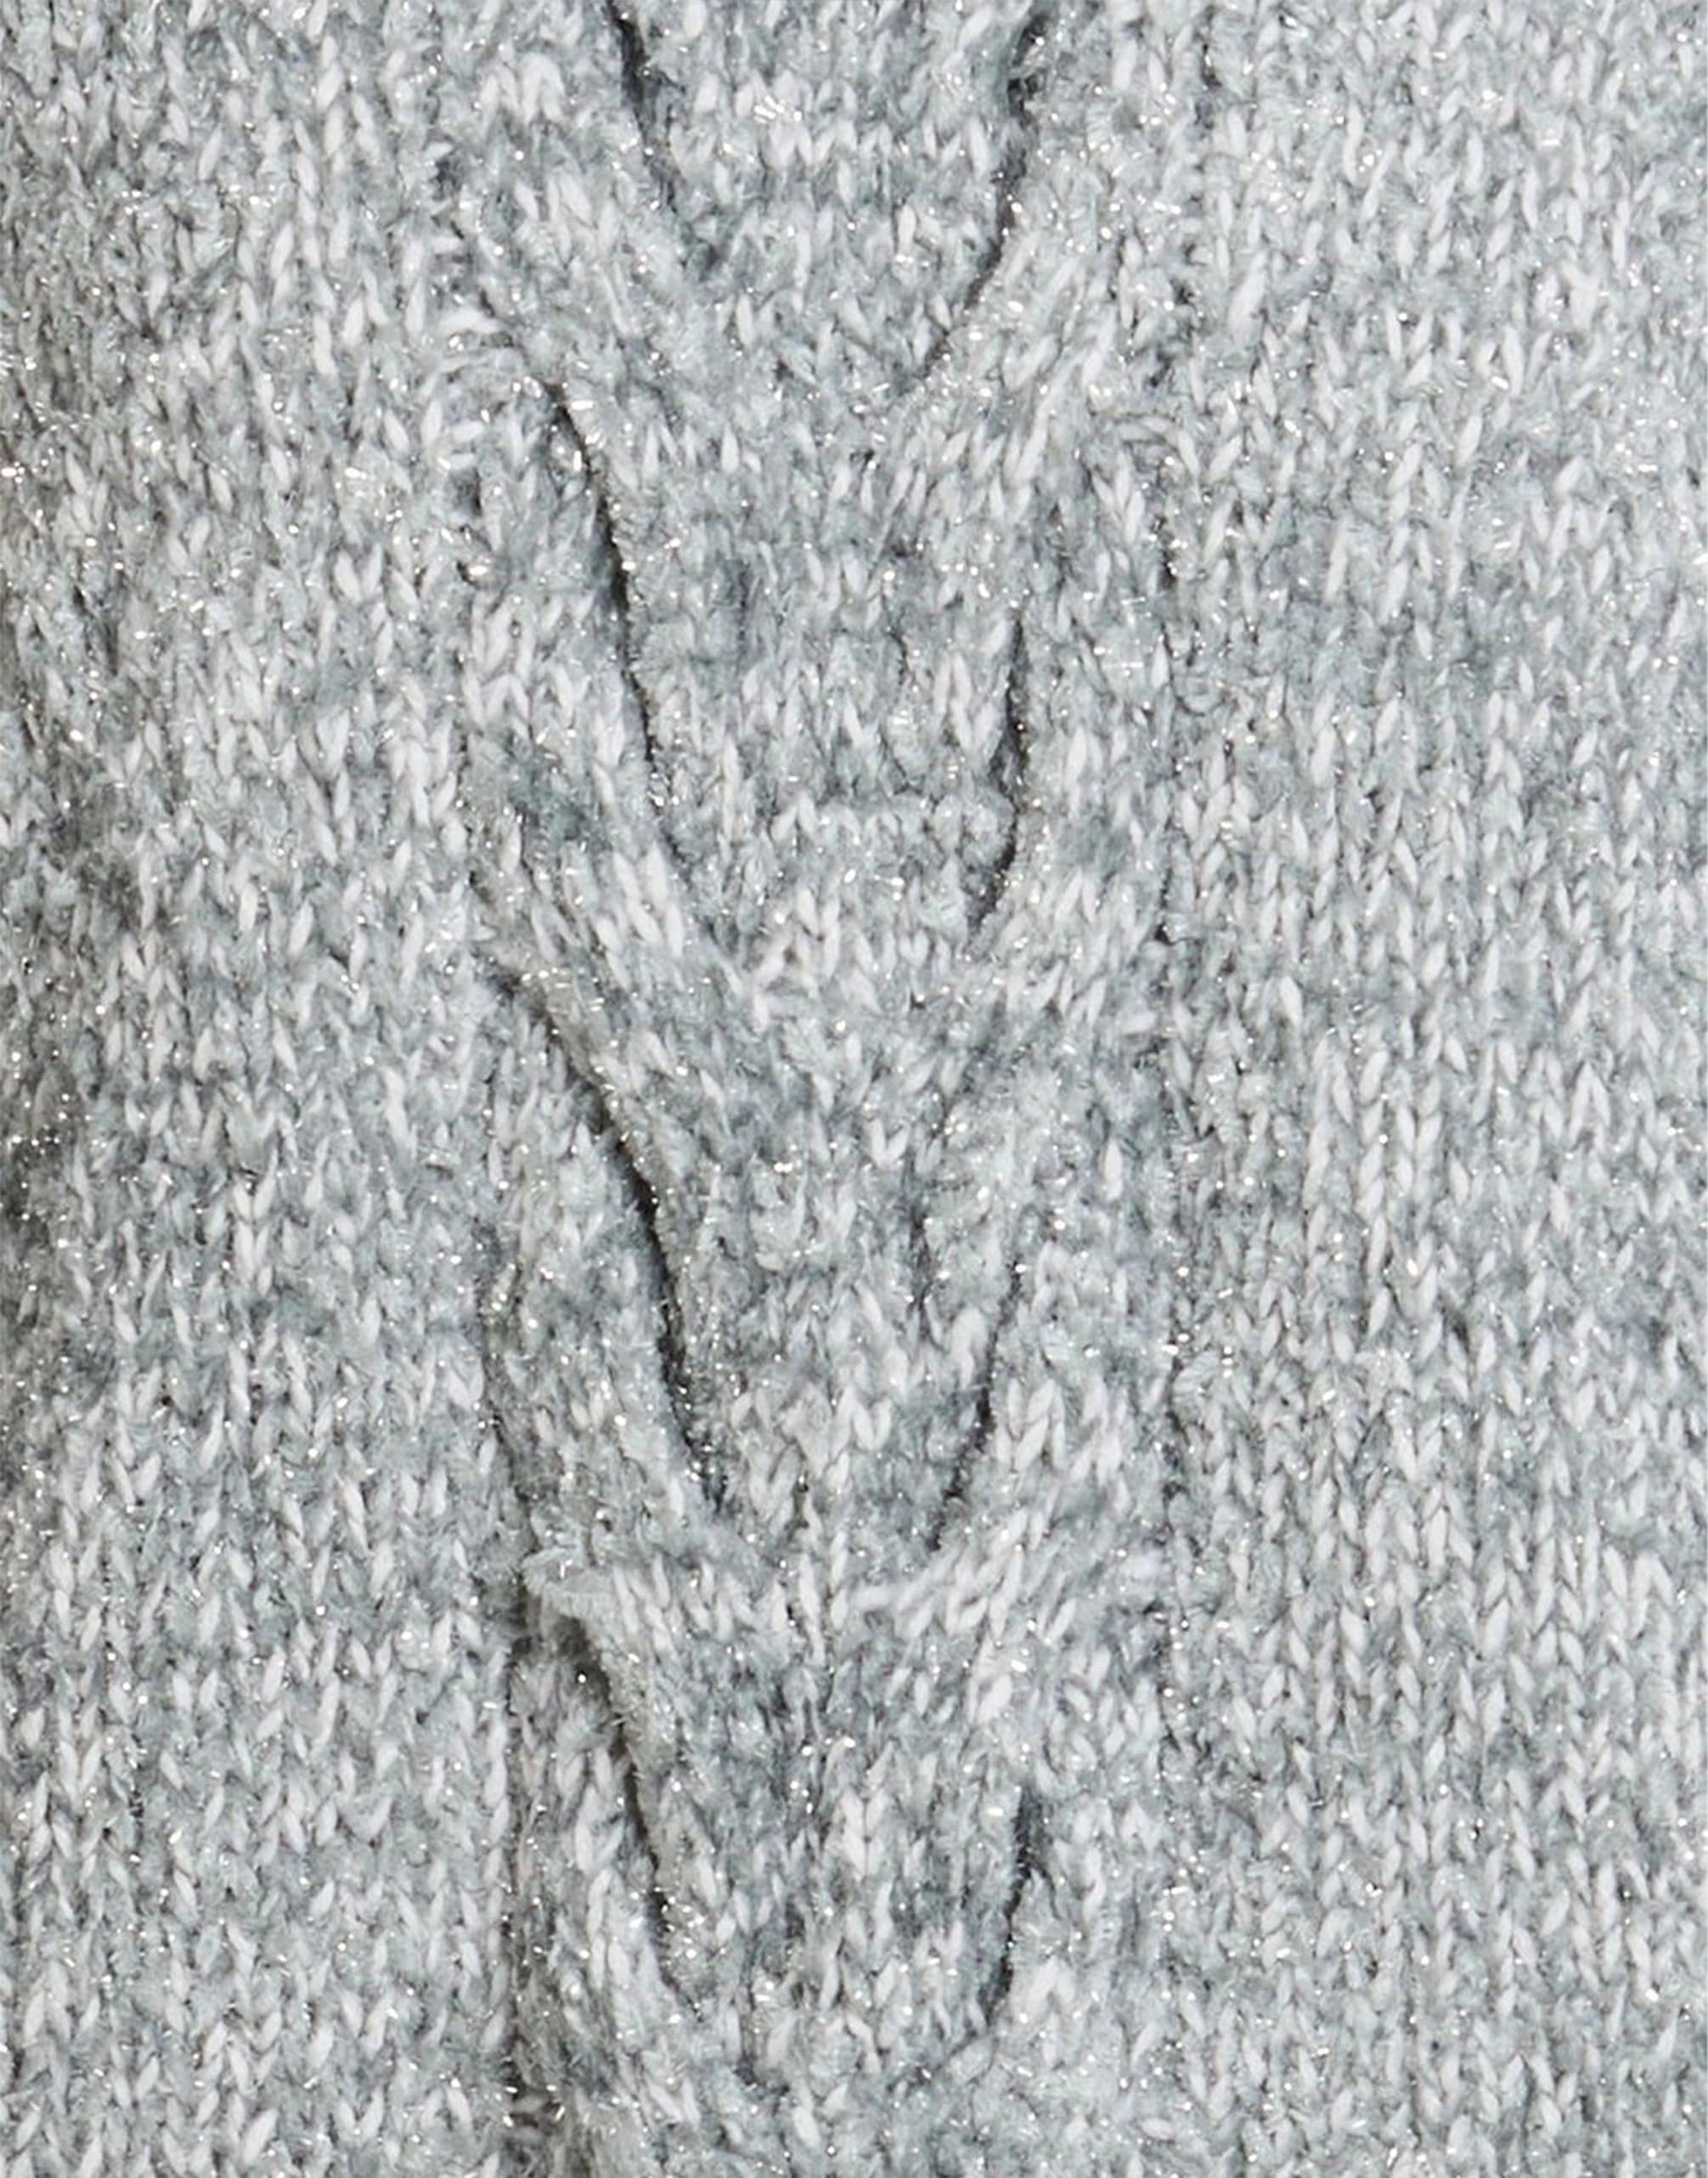 Dolce & Gabbana Metallic Cable-Knit Sweater